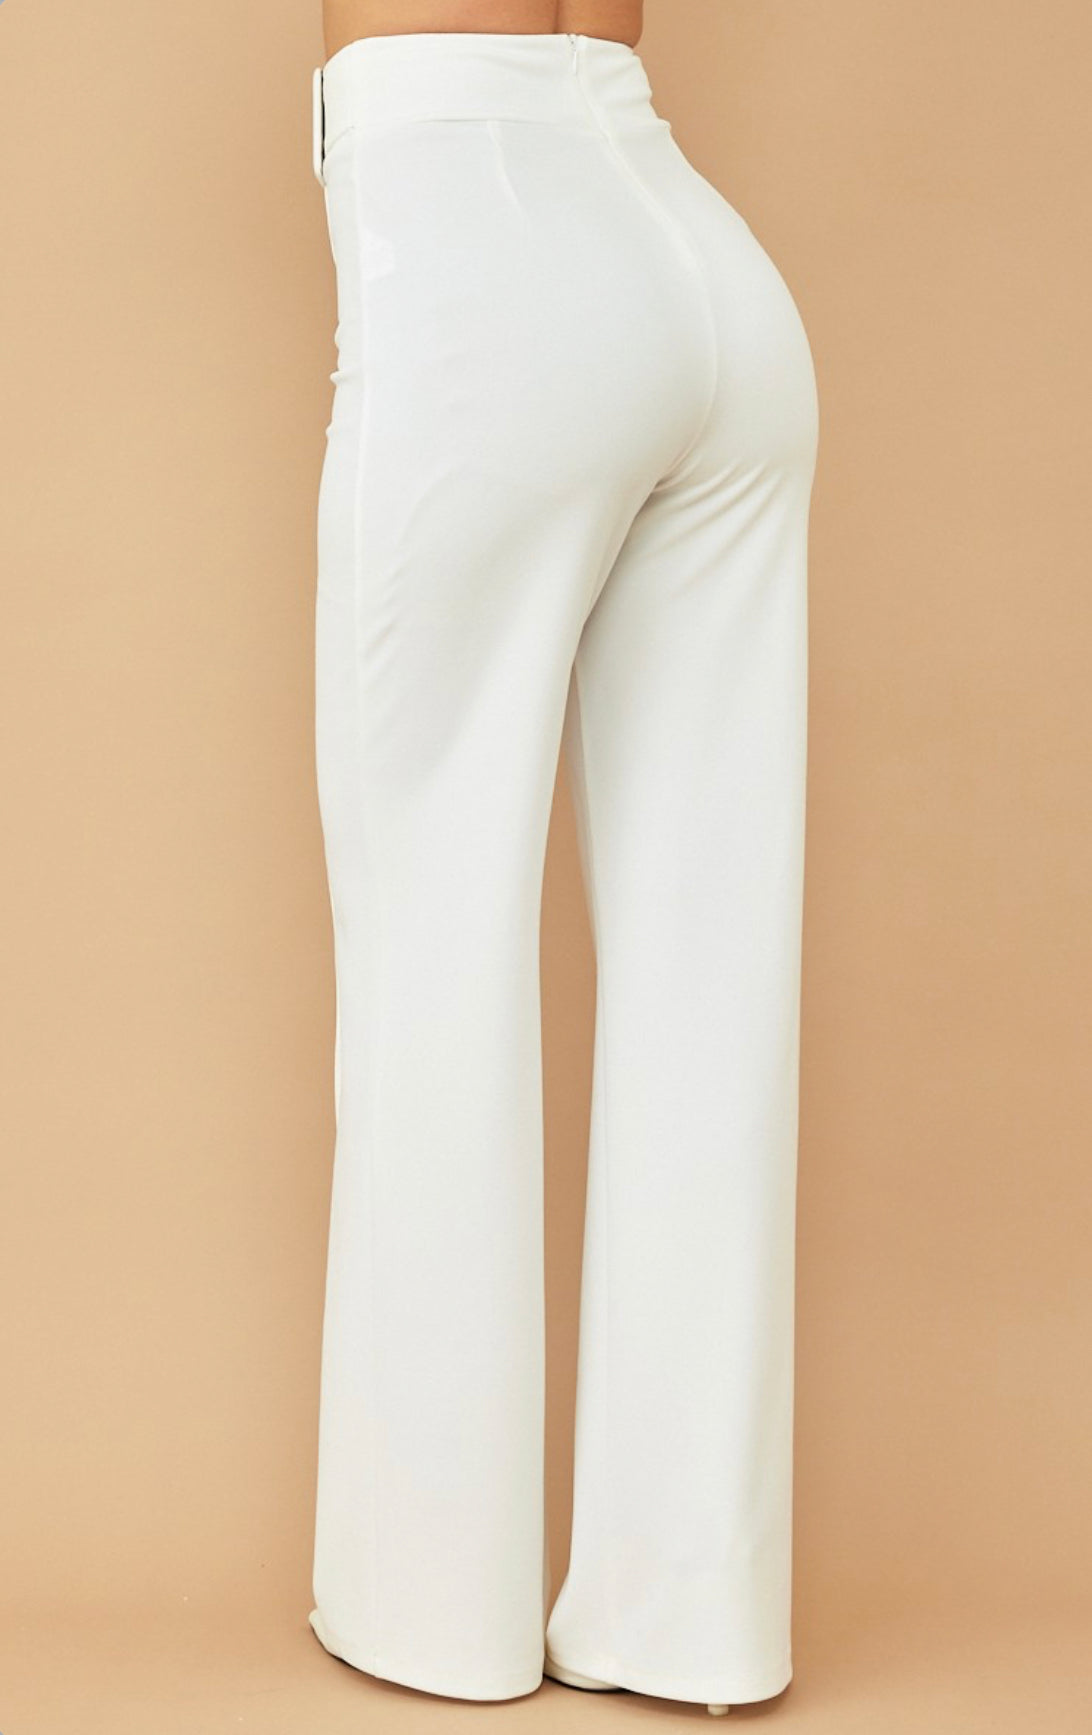 BUCKLE DETAIL HIGH WAIST PANTS- white.